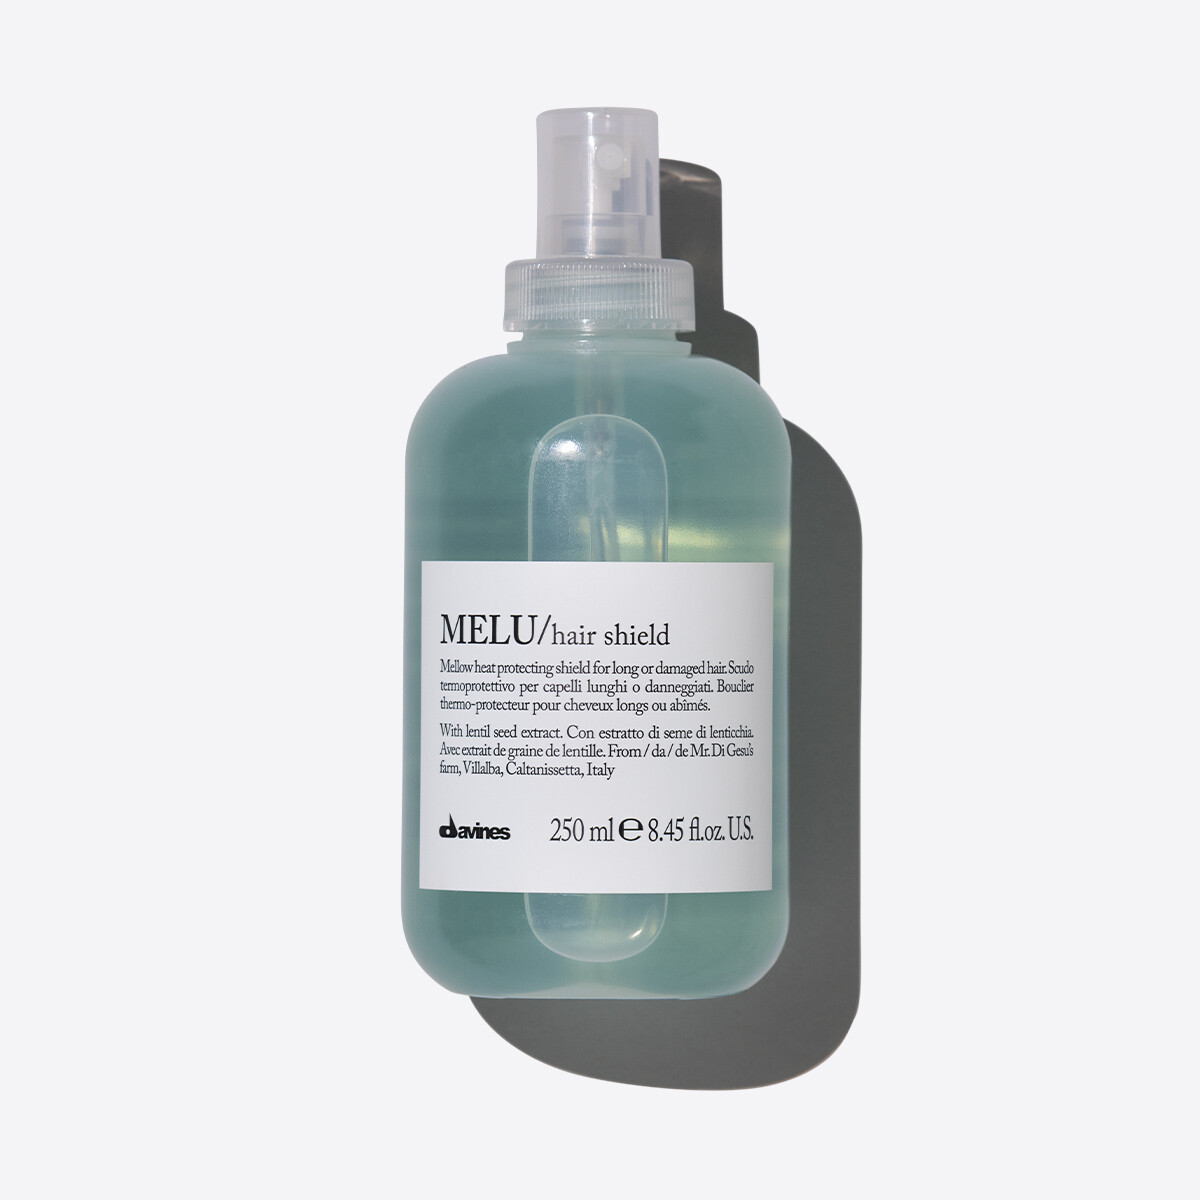 MELU/hair shield 250 ml